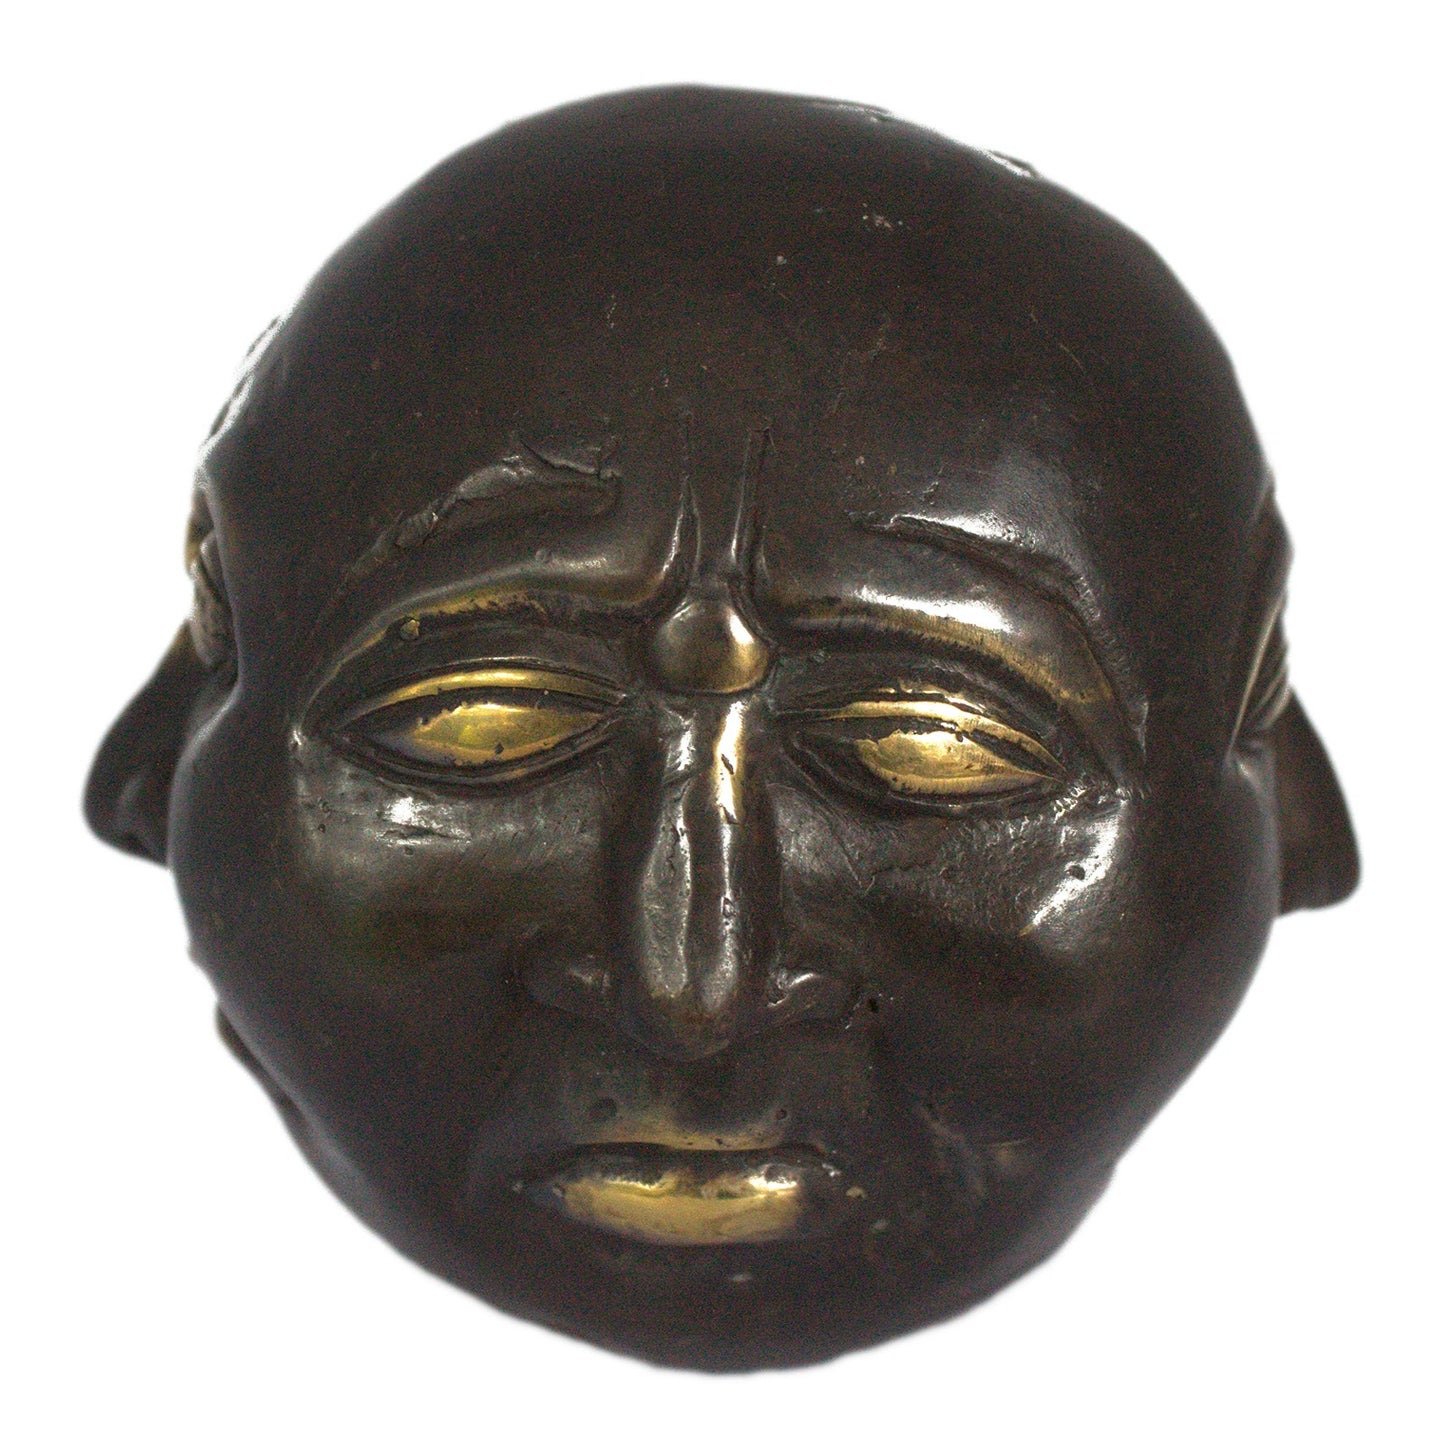 Fengshui - Four Face Buddha - 10cm